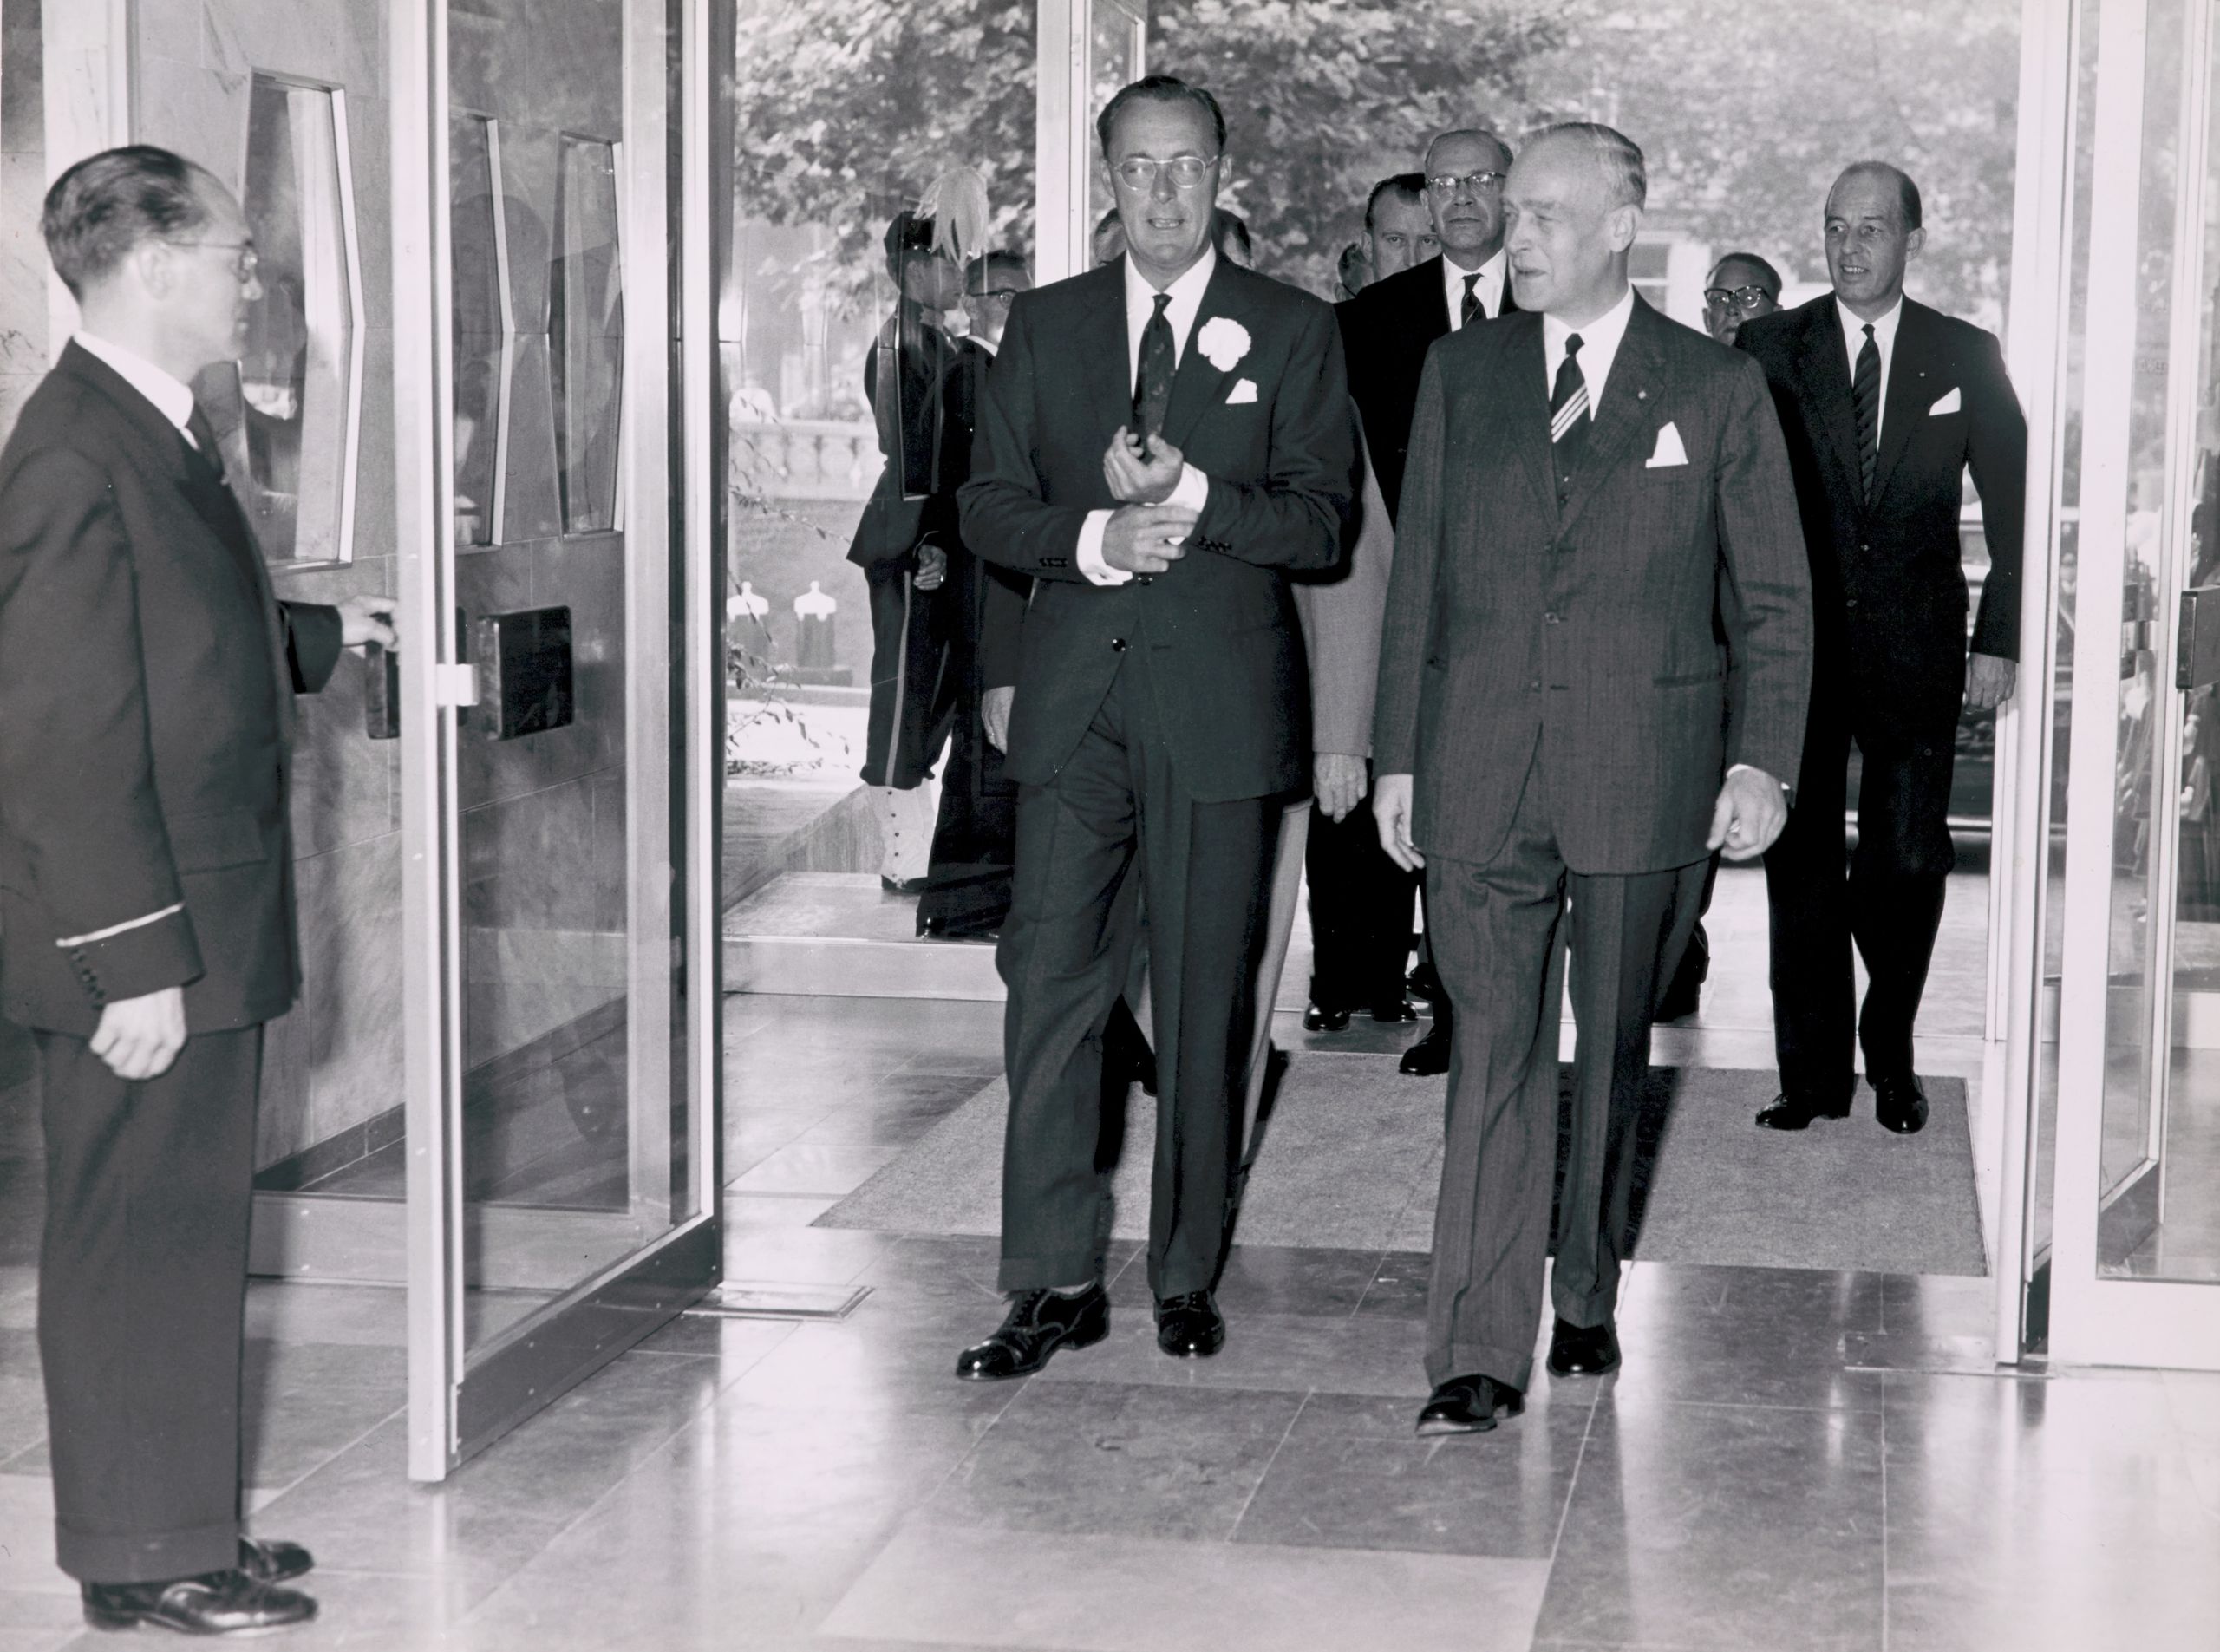 SHV director Jan Fentener van Vlissingen (right) with Prince Bernhard of the Netherlands (left) walking into the new headquarters, 1960.